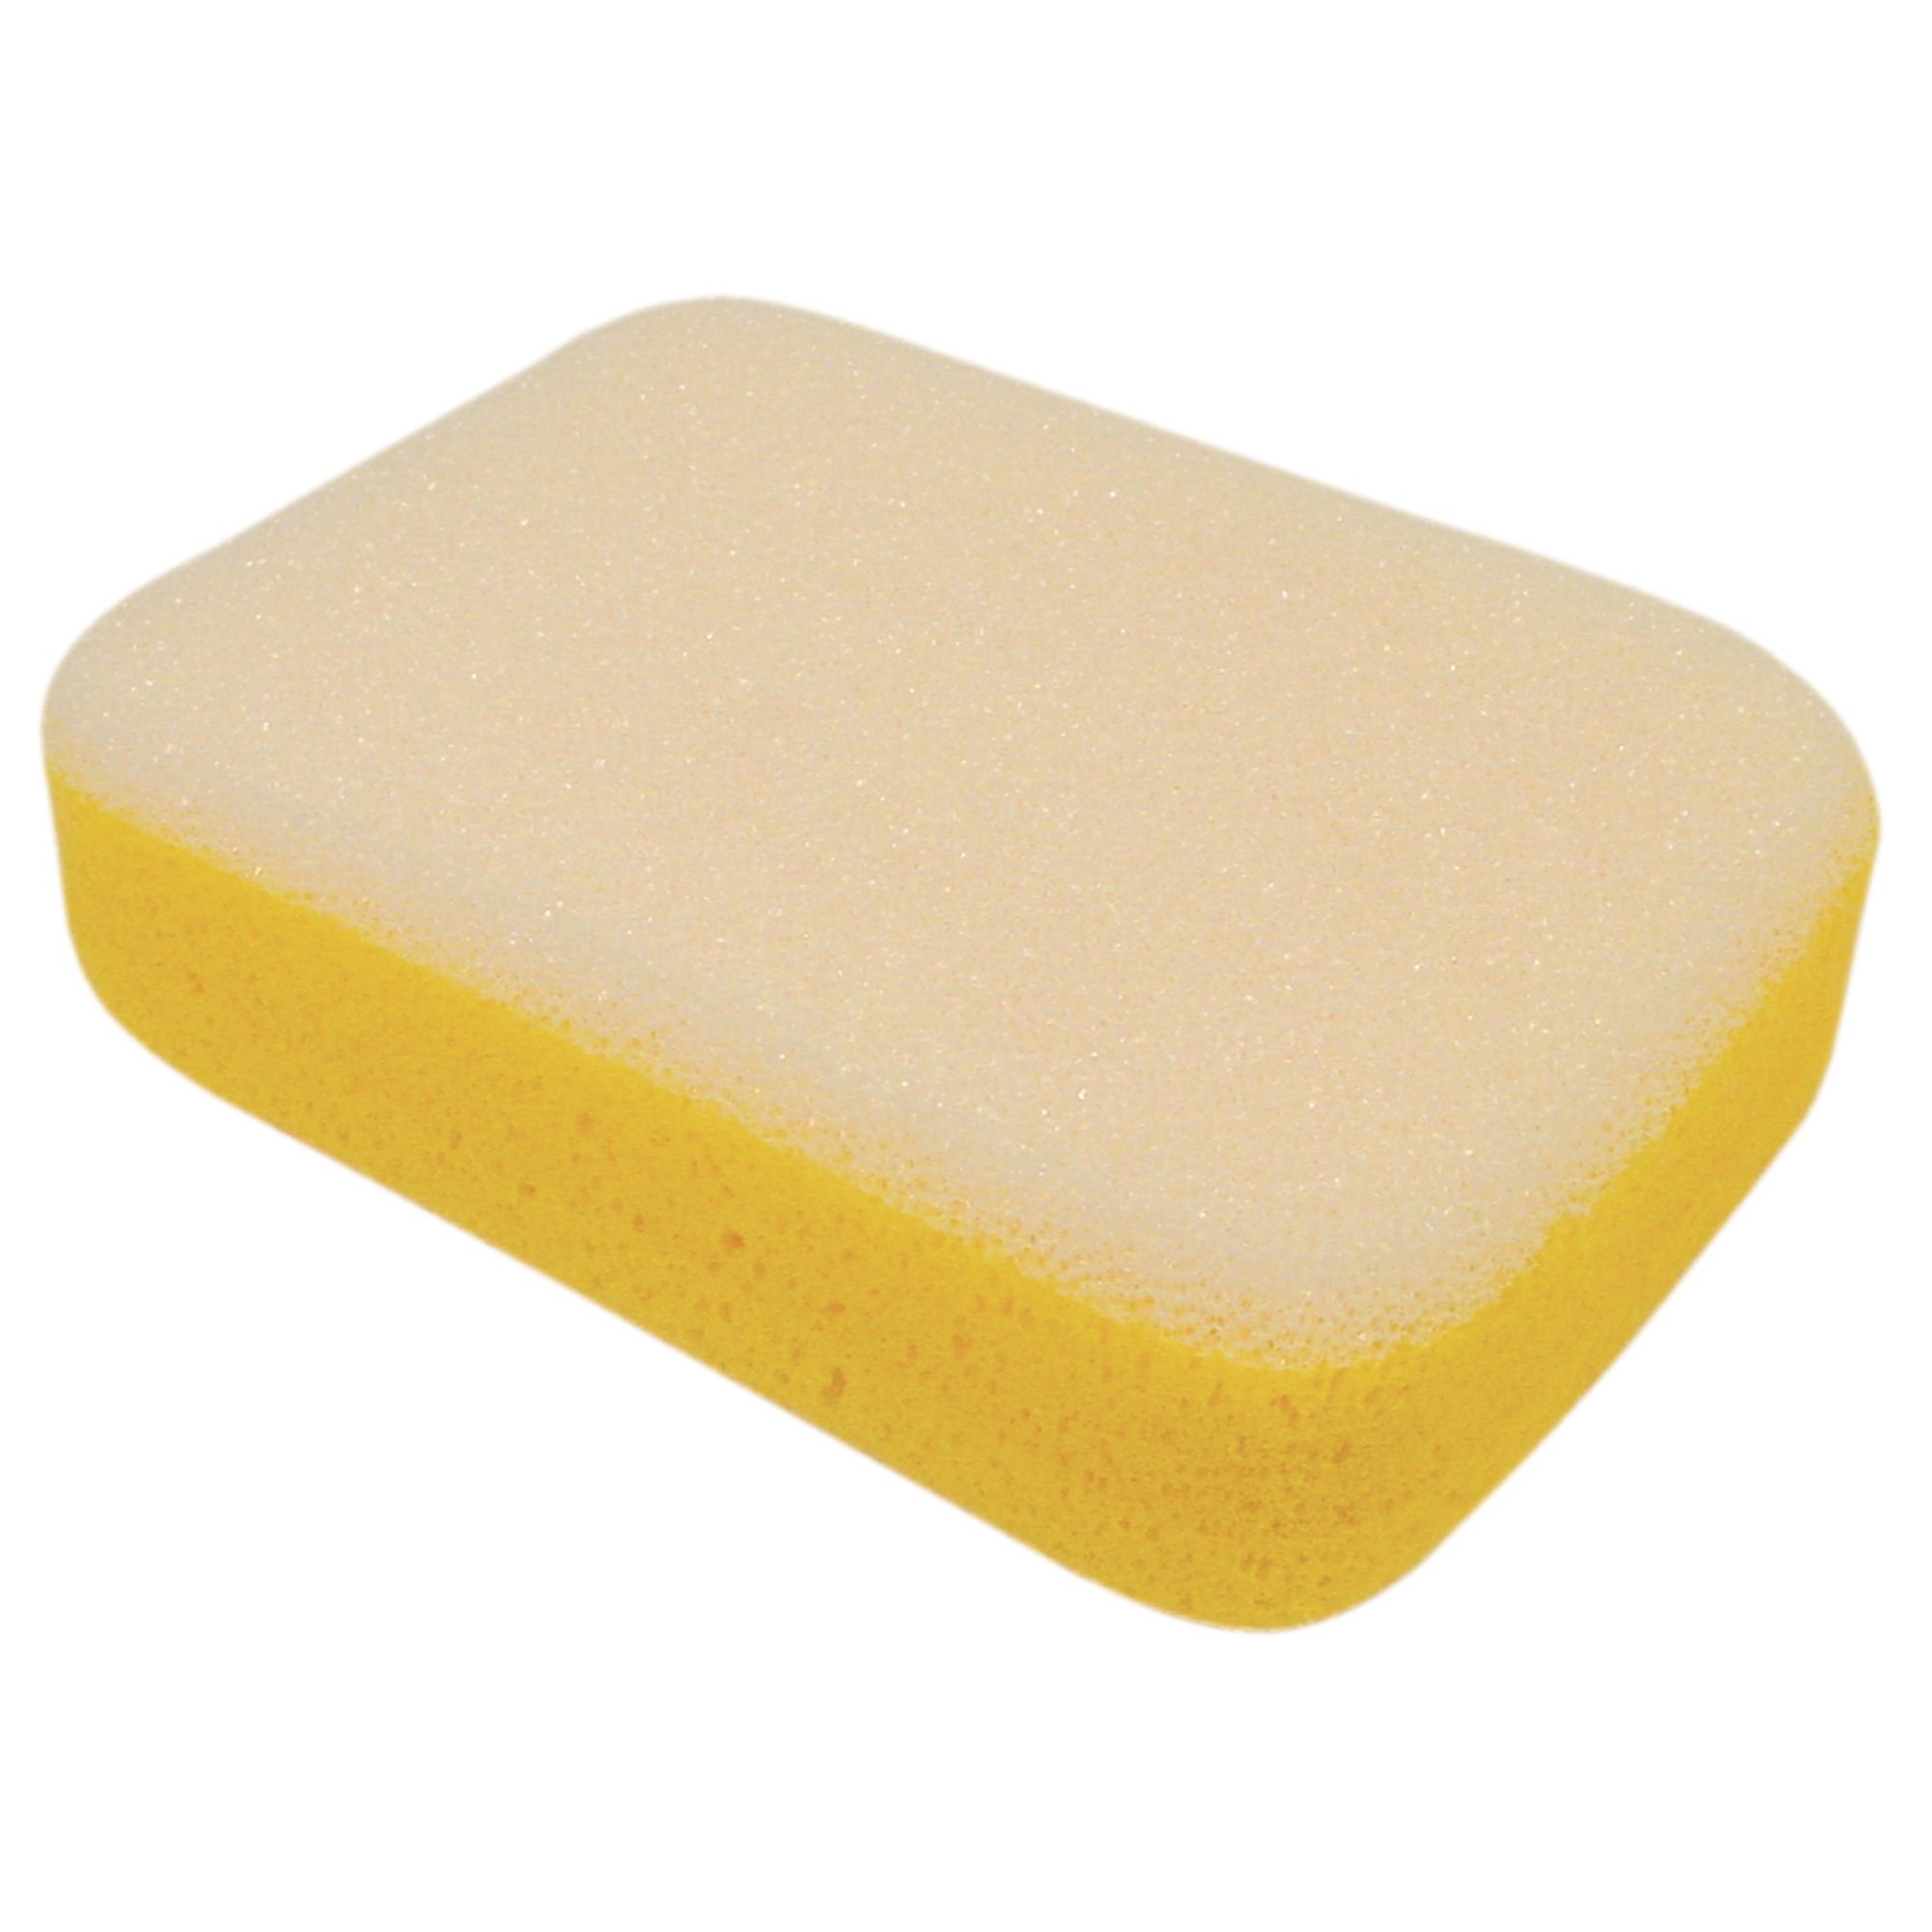 Vitrex Yellow Dual purpose Grout sponge